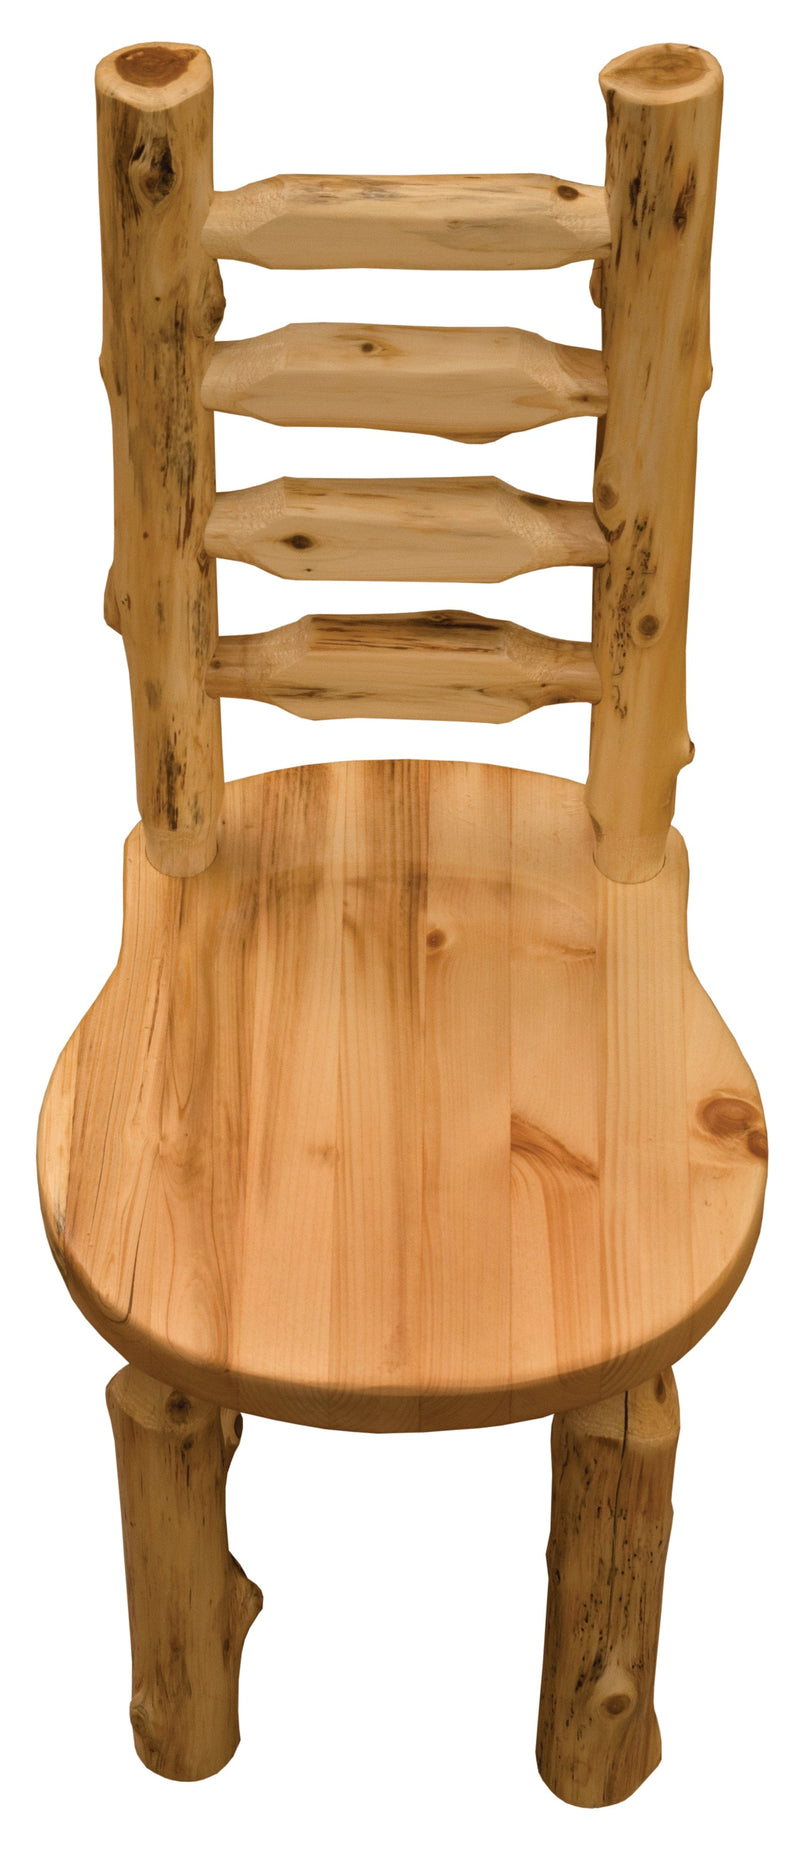 Cedar Log Bistro Side Chair